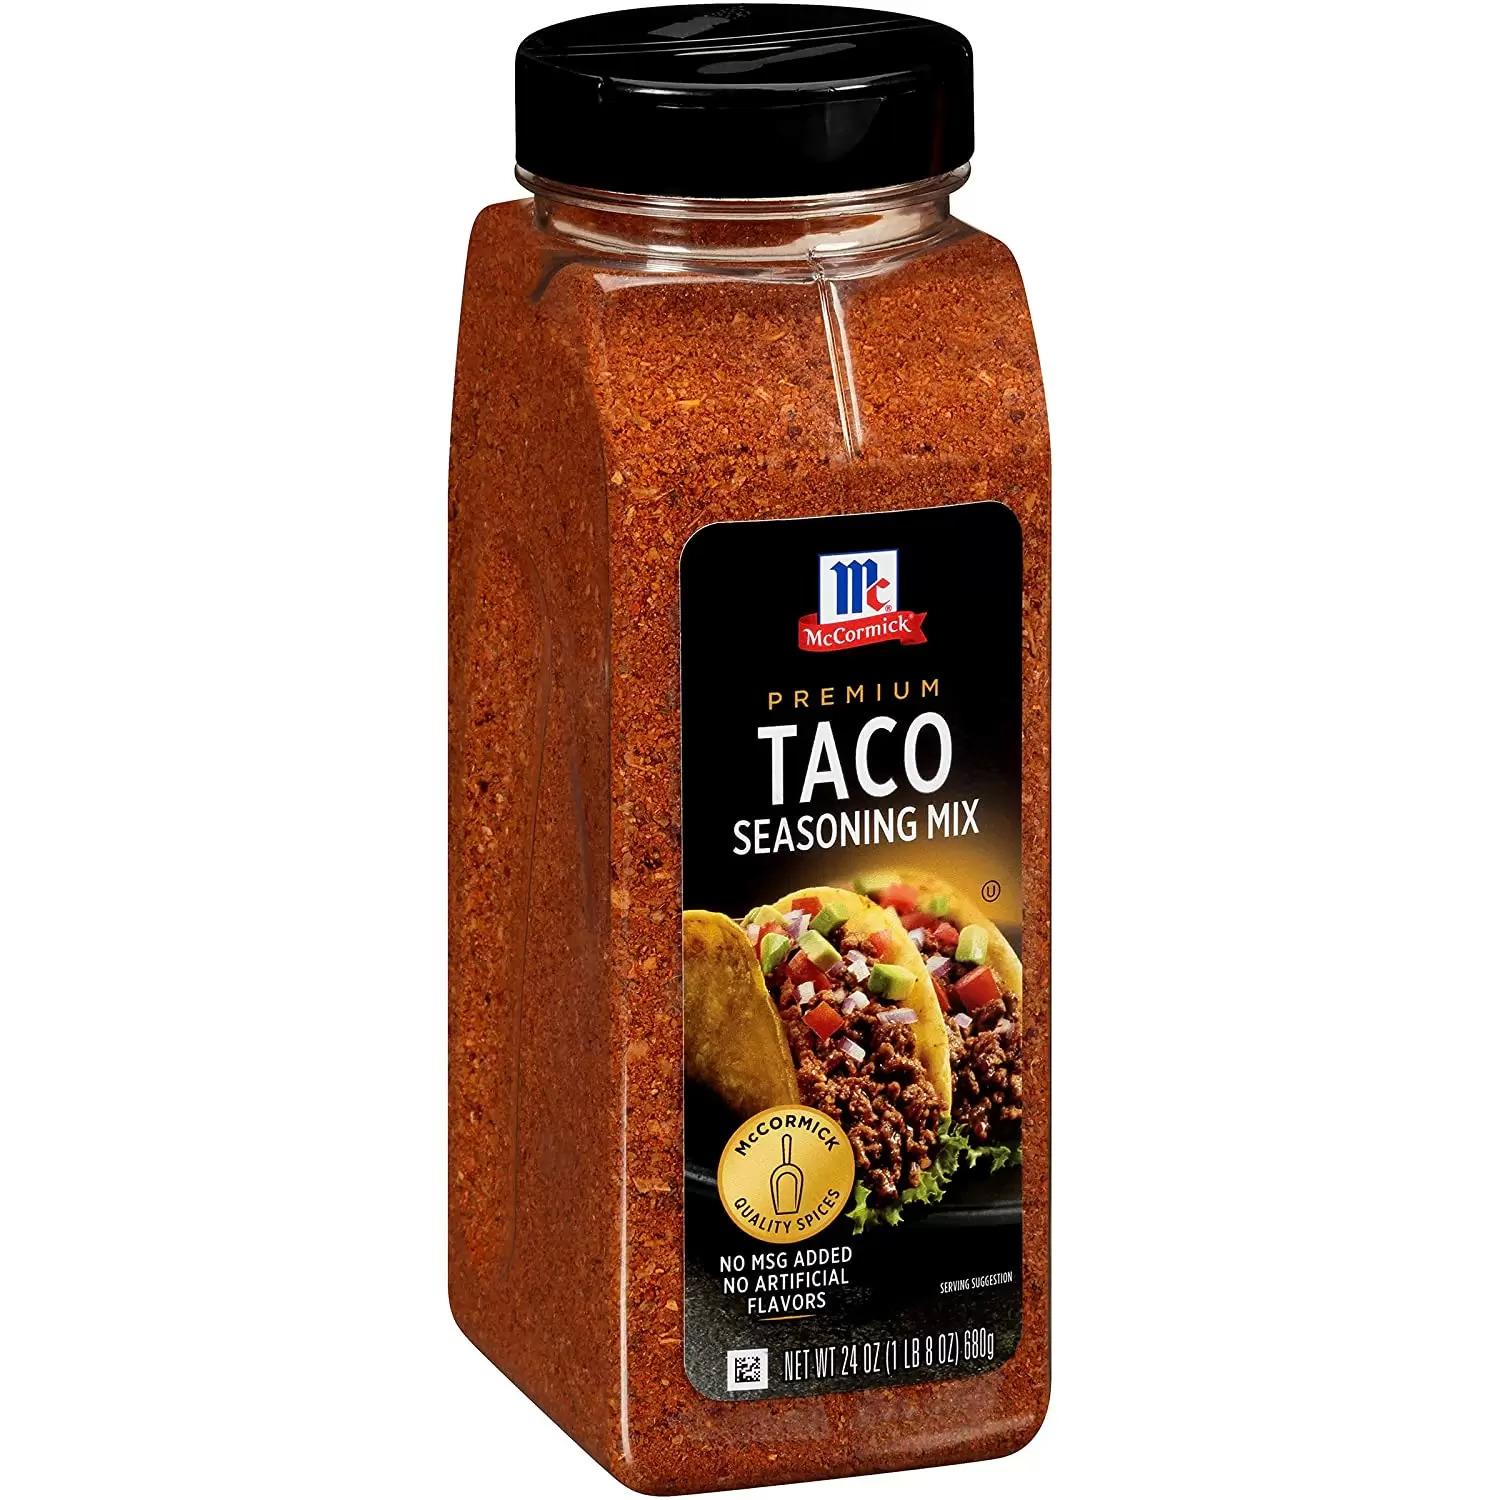 McCormick Premium Taco Seasoning Mix for $5.09 Shipped